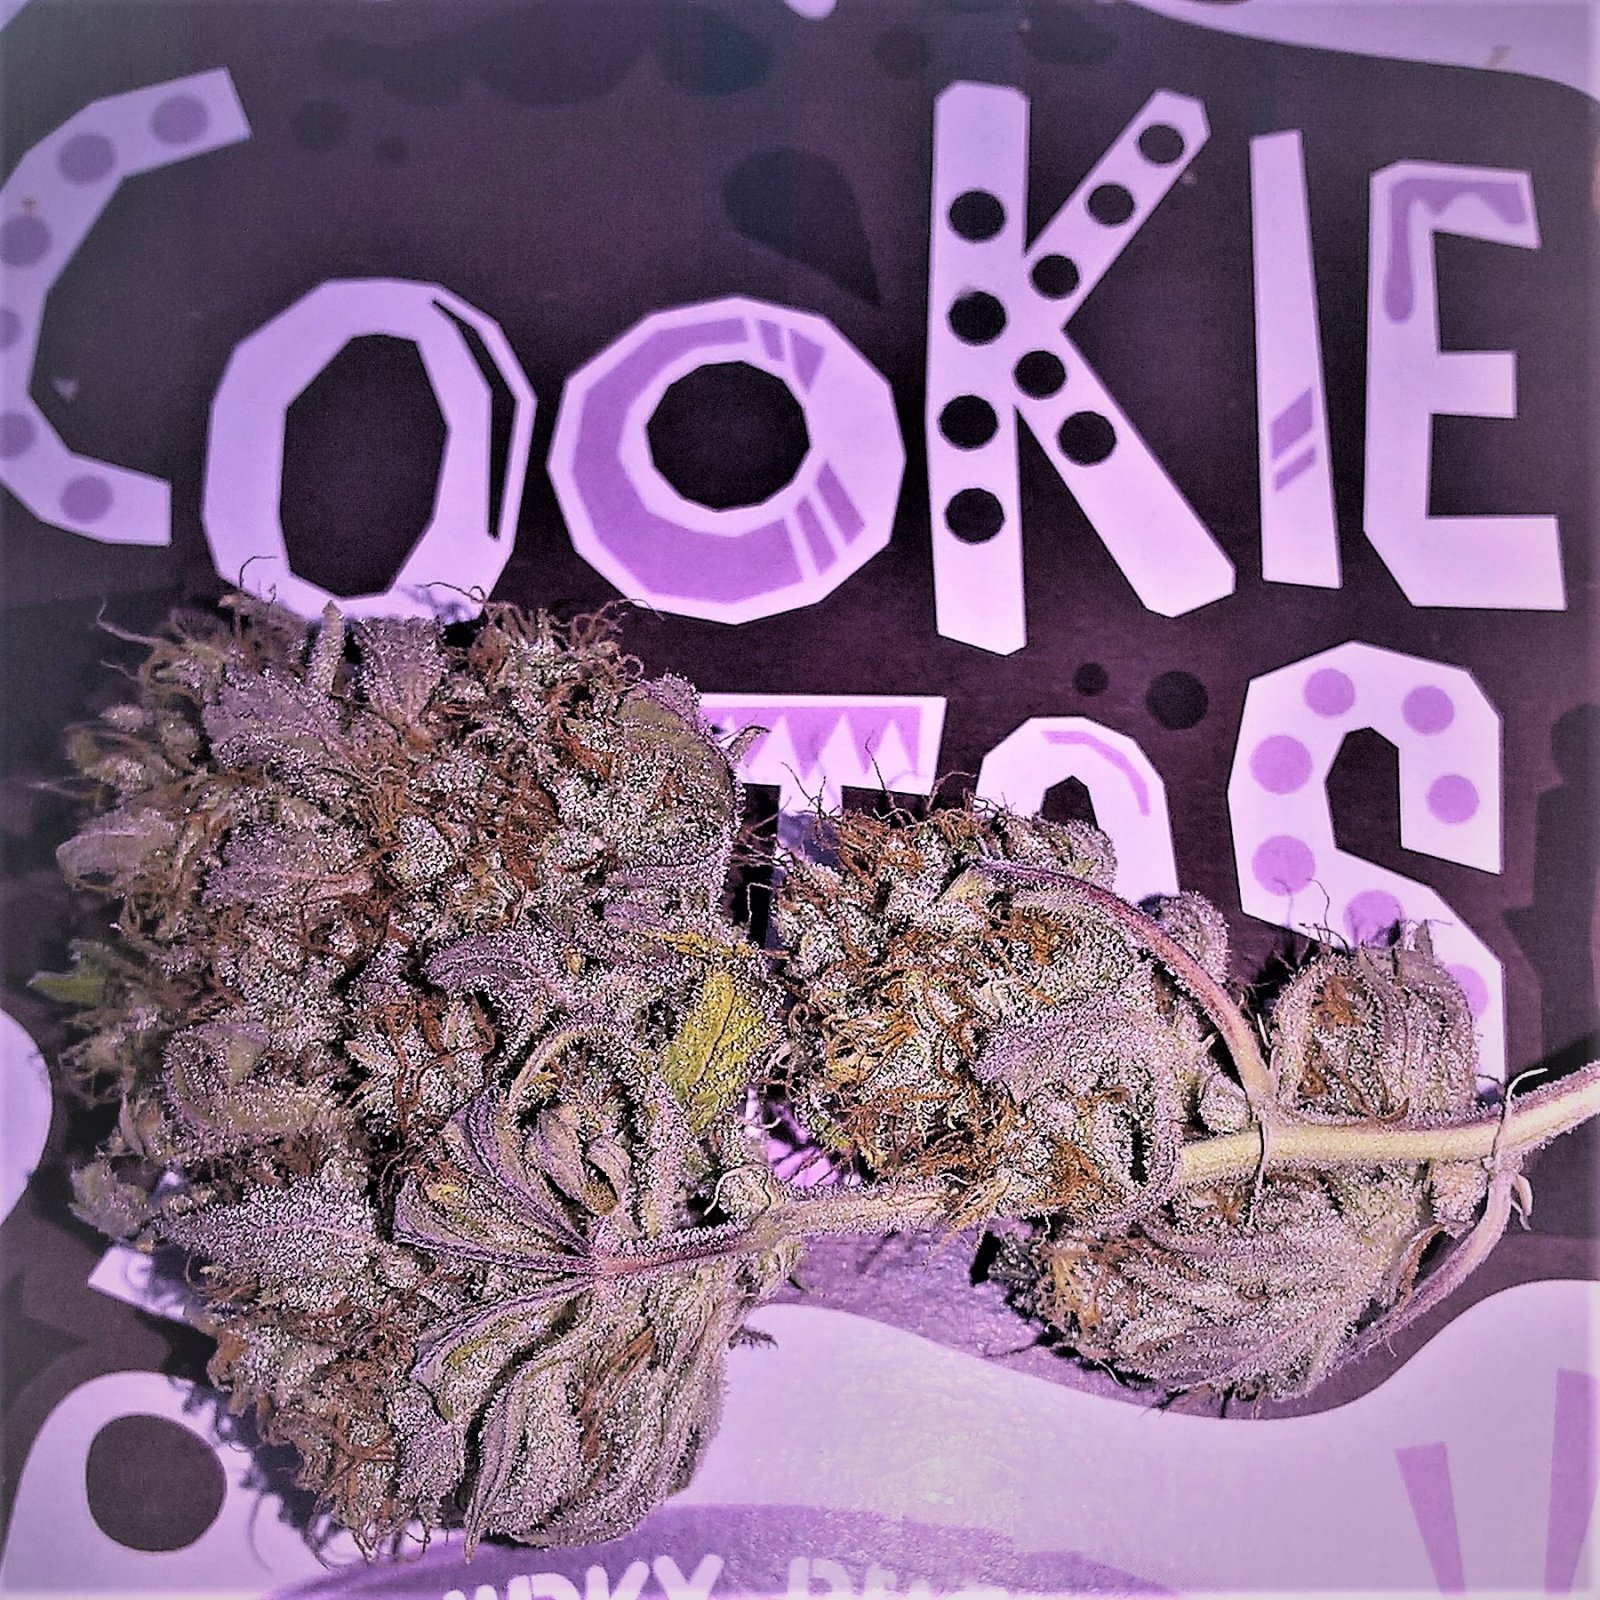 Gorilla cookies Auto.jpg